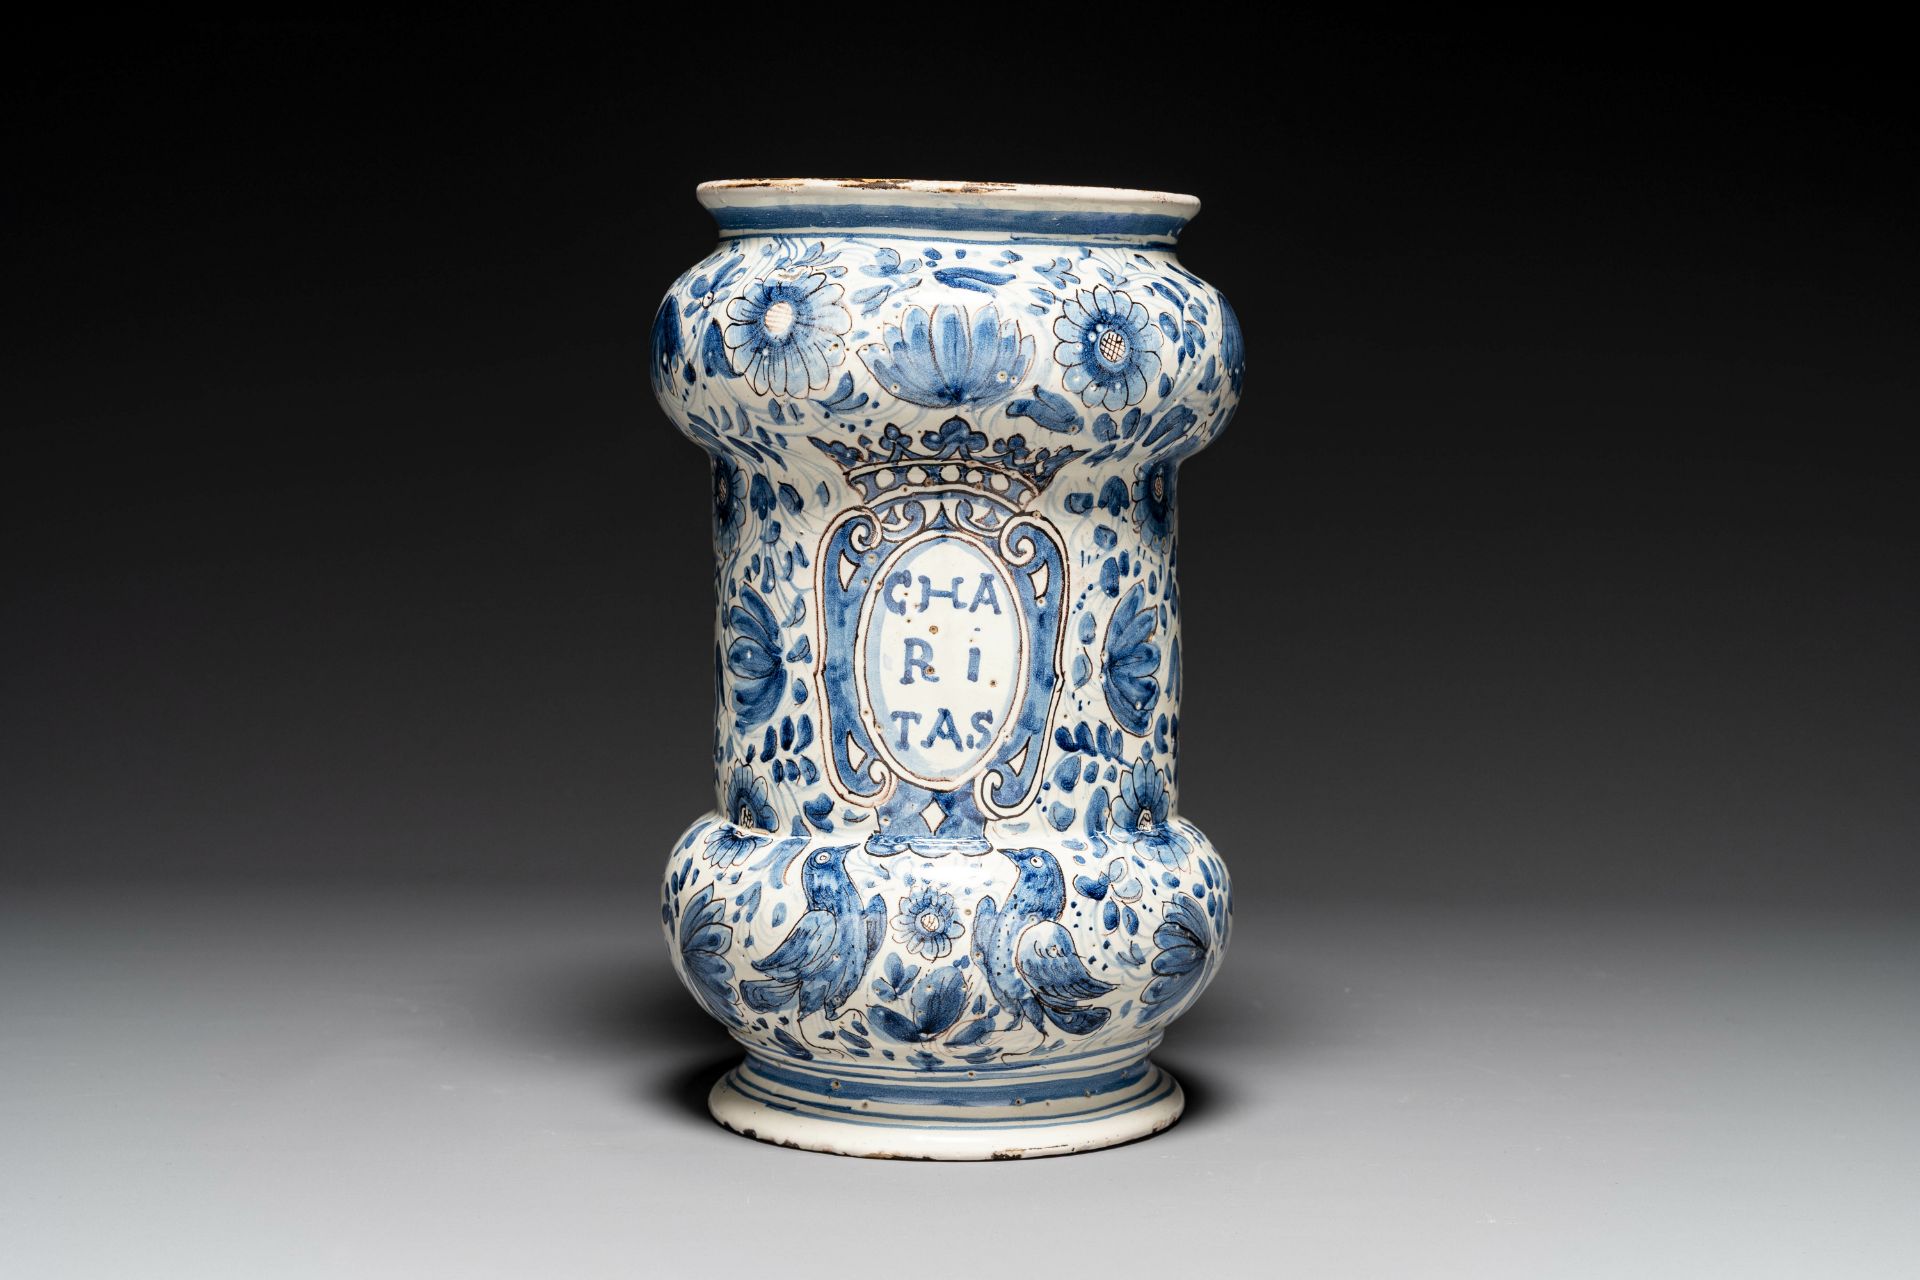 A large Italian blue, white and manganese albarello drug jar inscribed Charitas, probably Savona